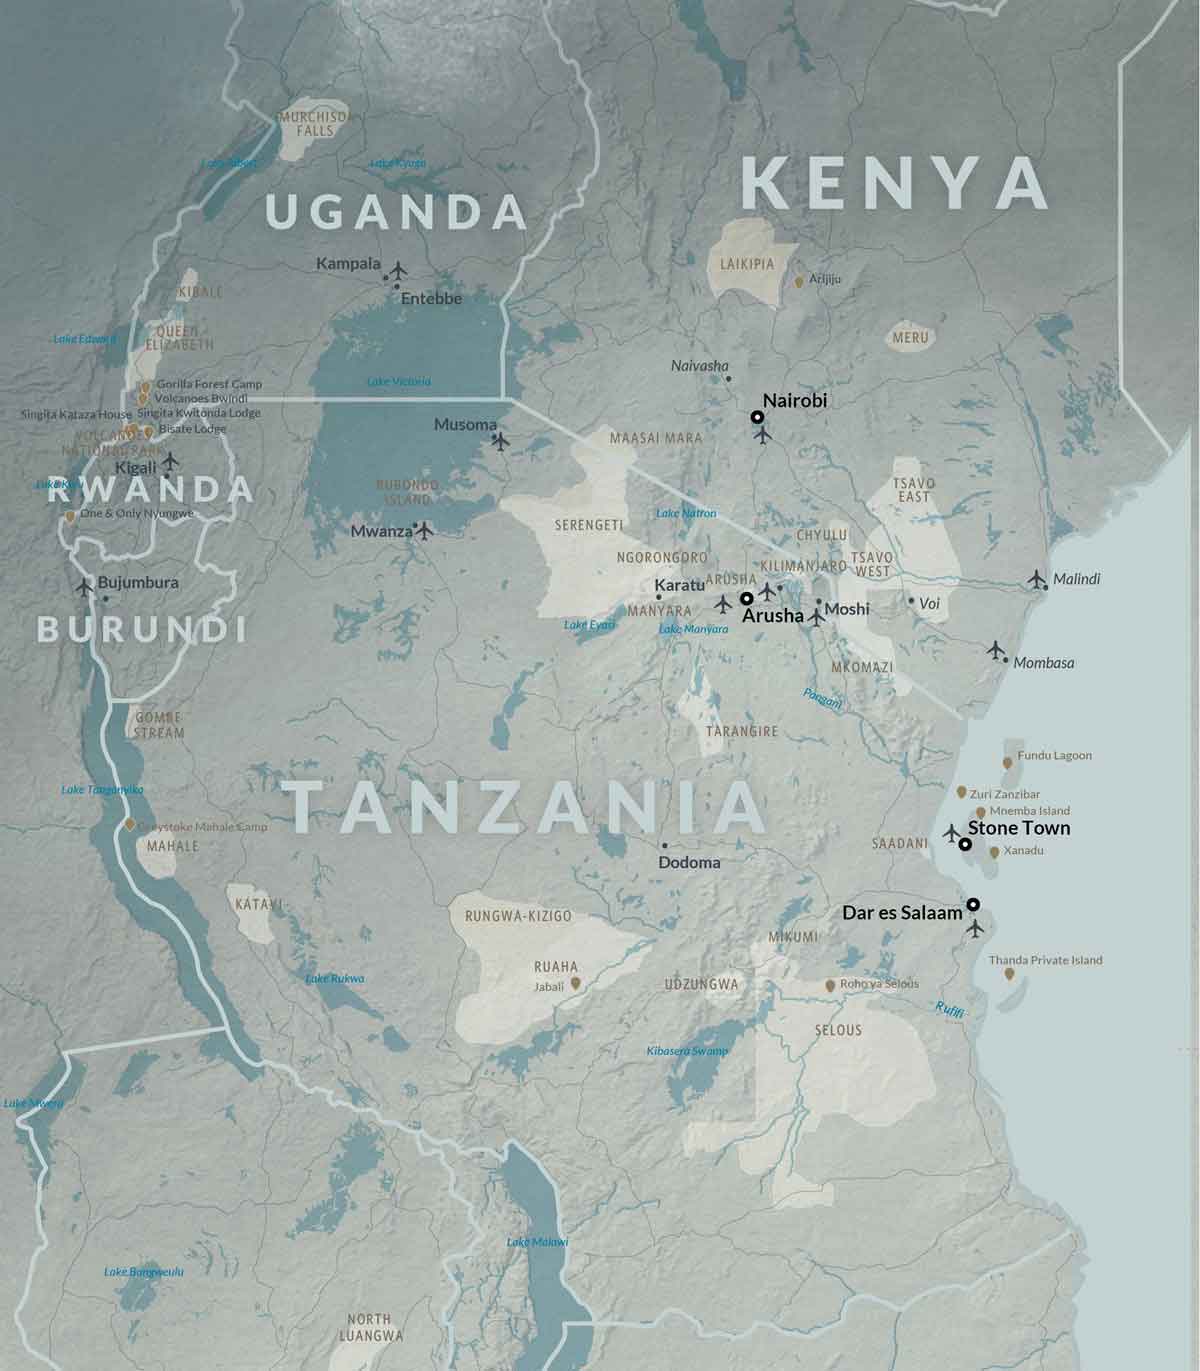 Detailed map of East Africa including Kenya, Uganda, Tanzania, Rwanda and Burundi